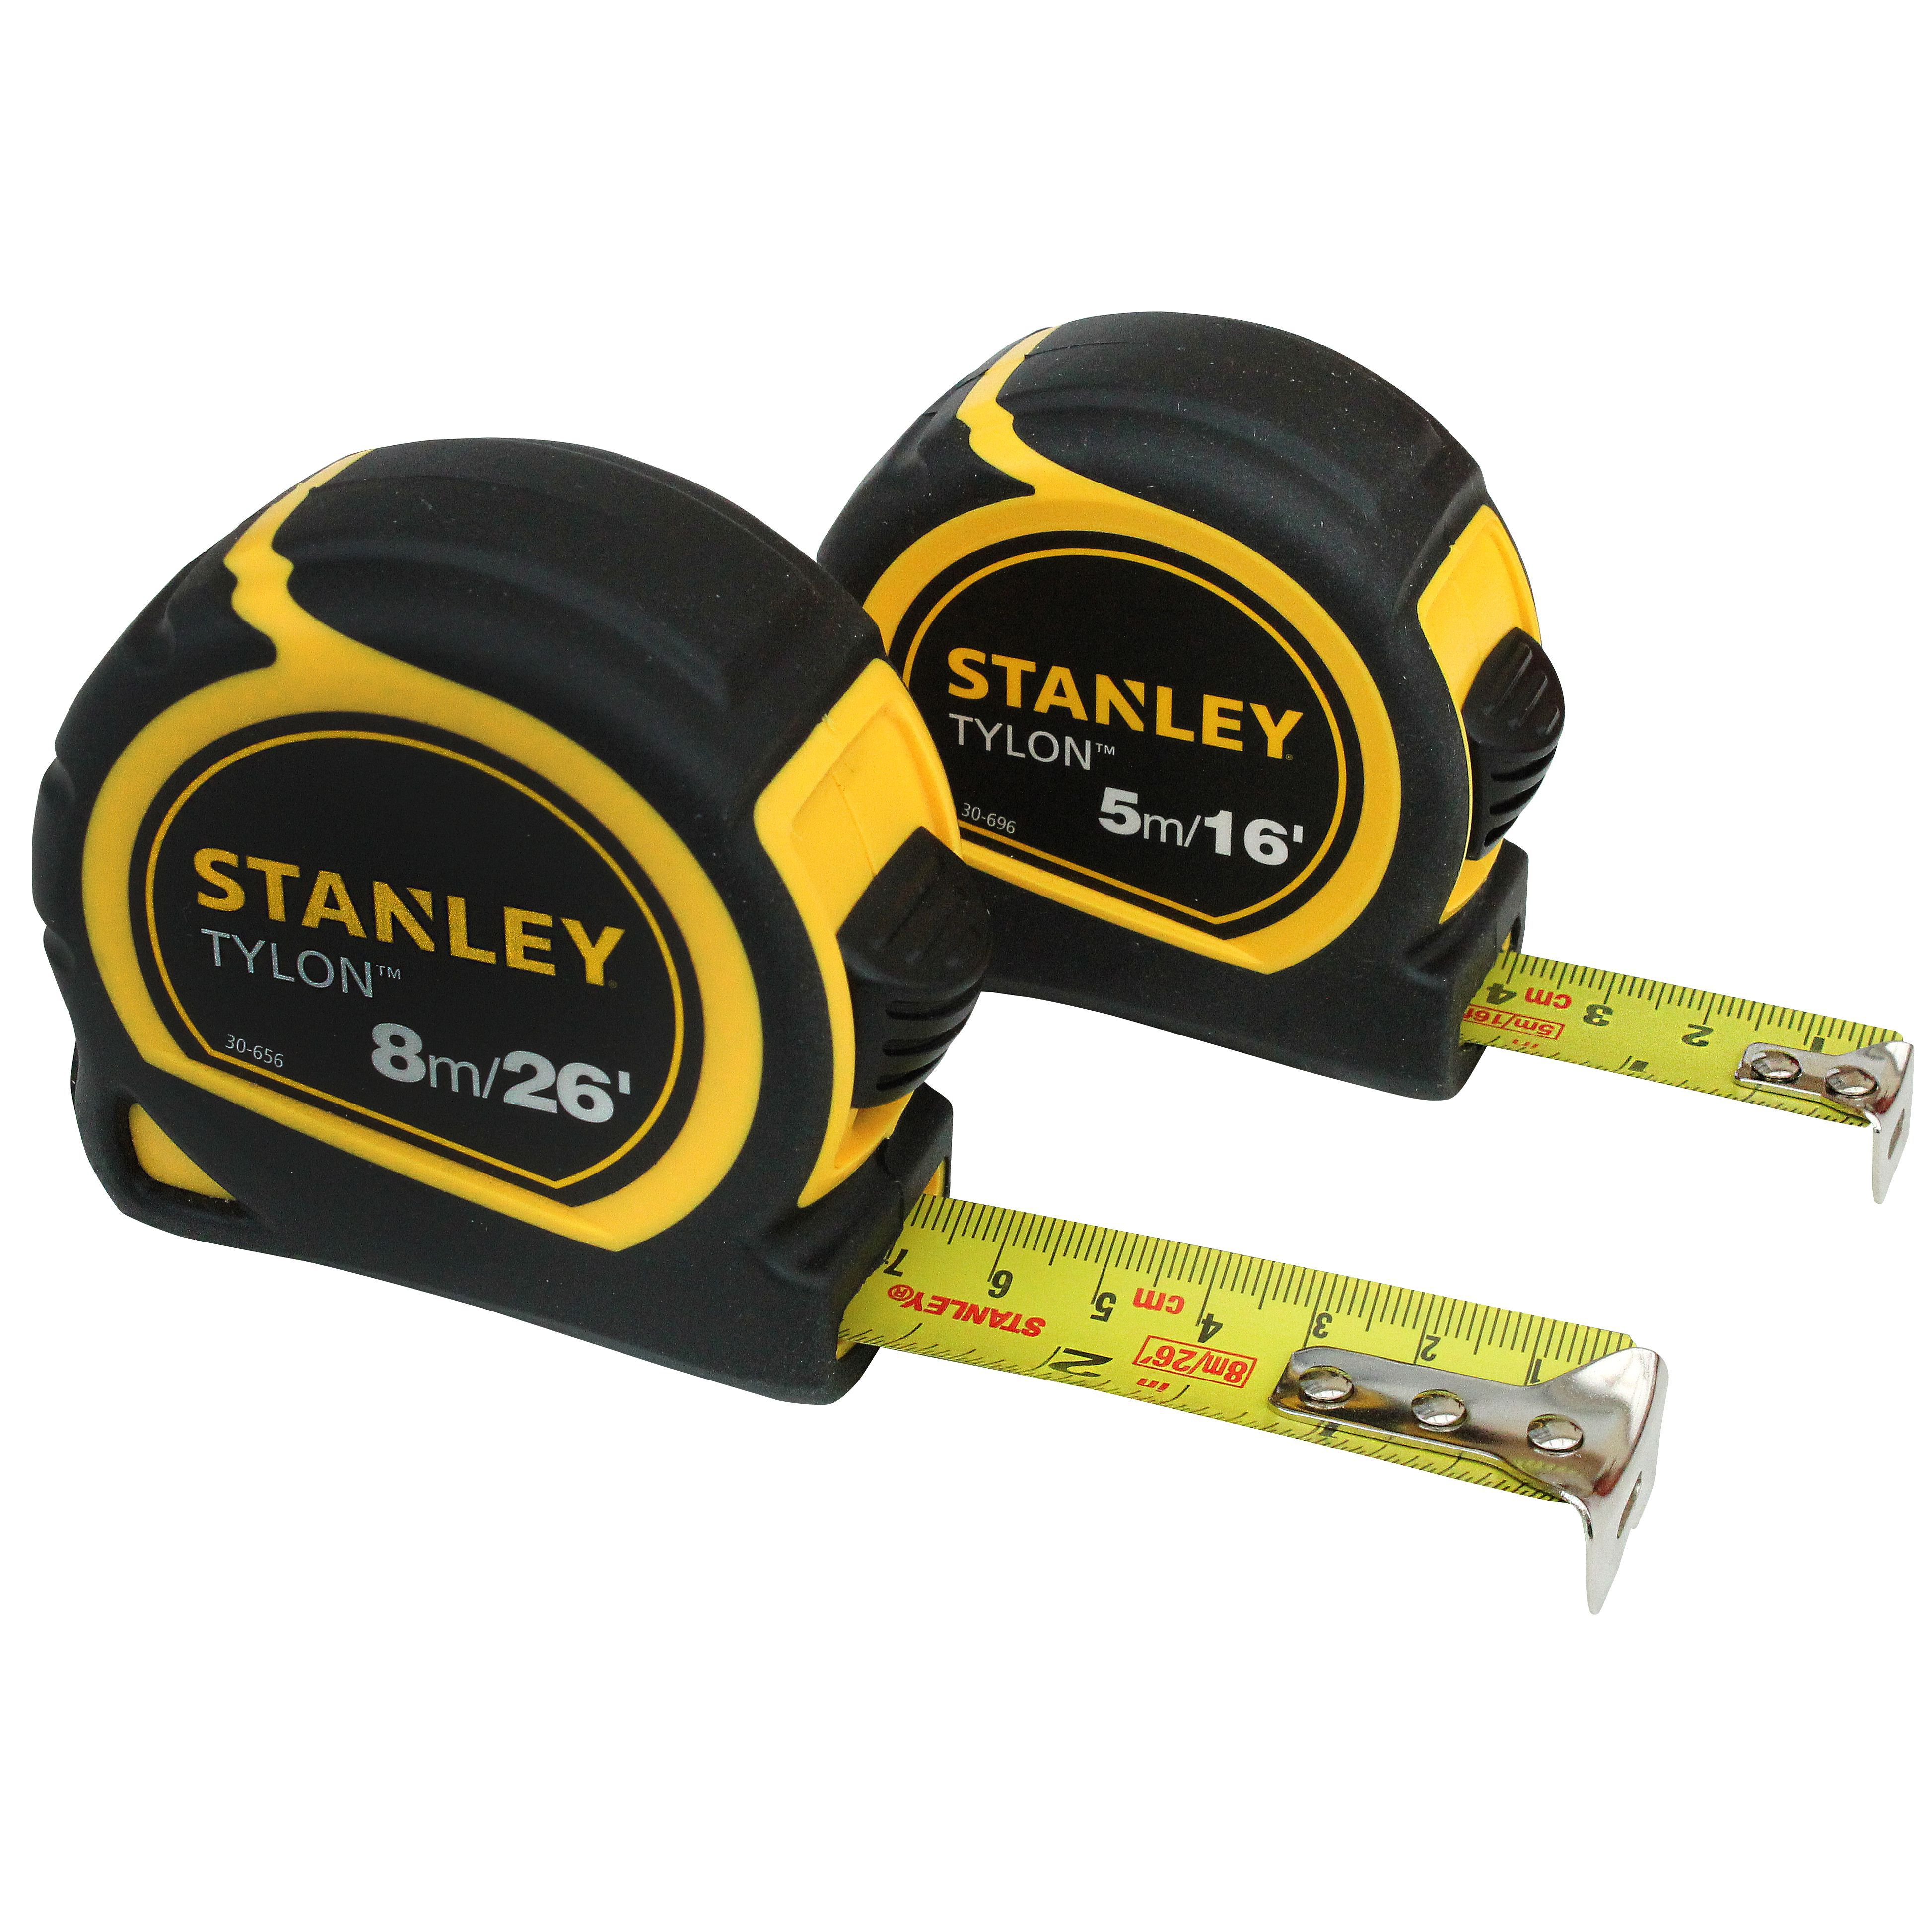 Stanley Tape measure, 13